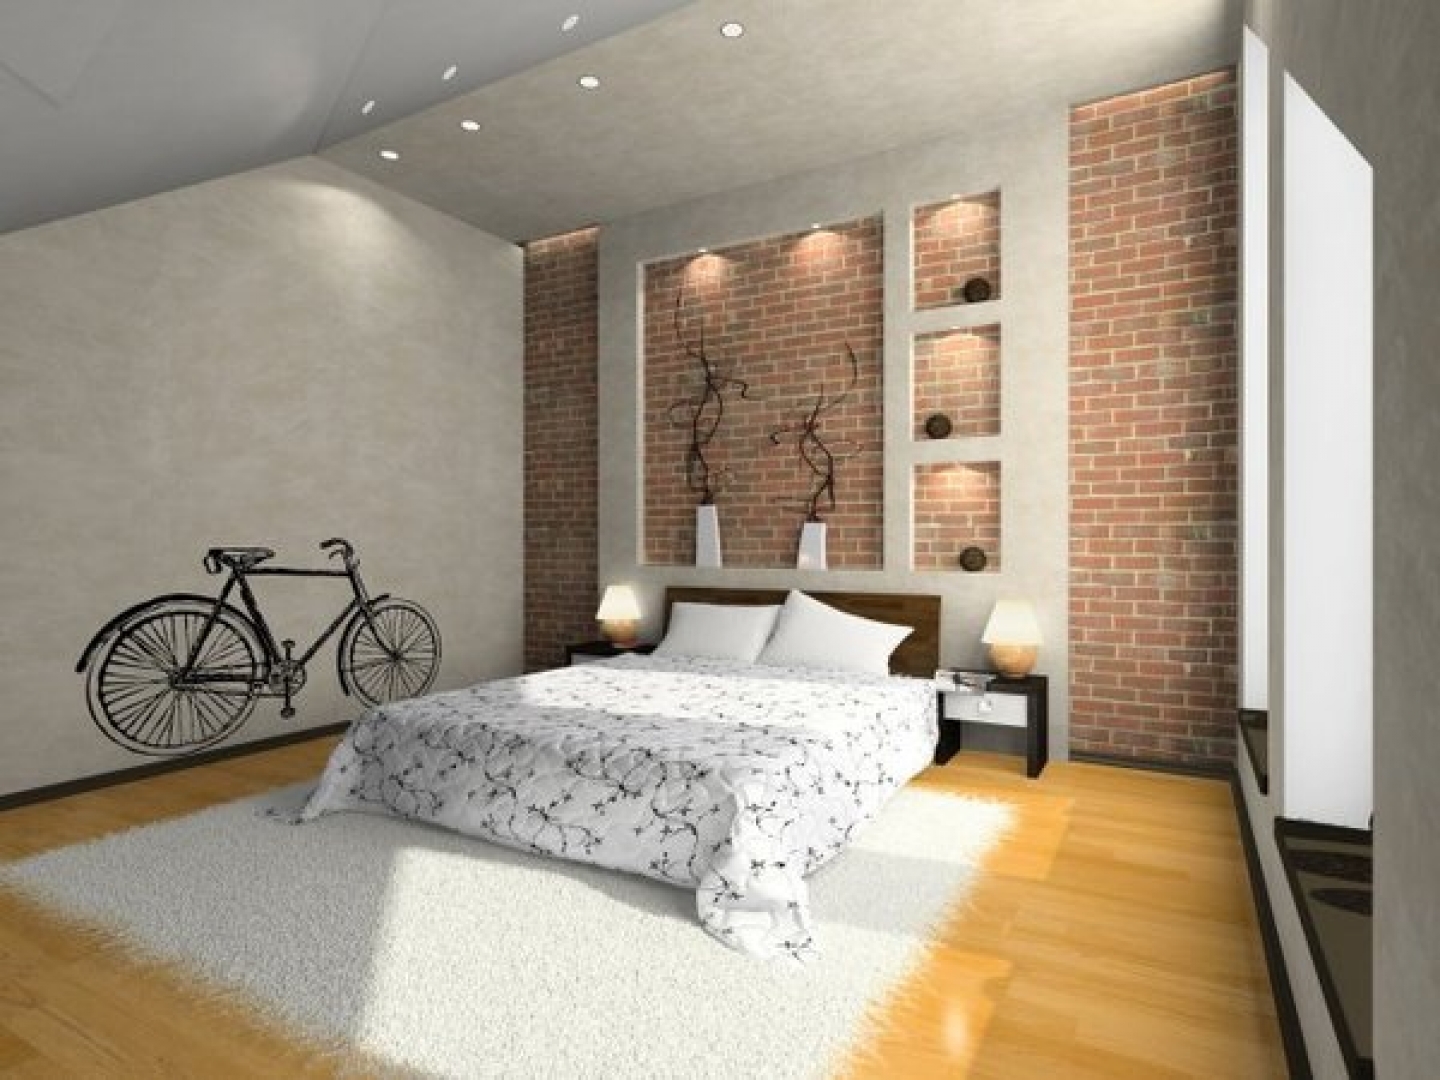 wallpaper for bedroom walls designs,room,interior design,bedroom,property,wall